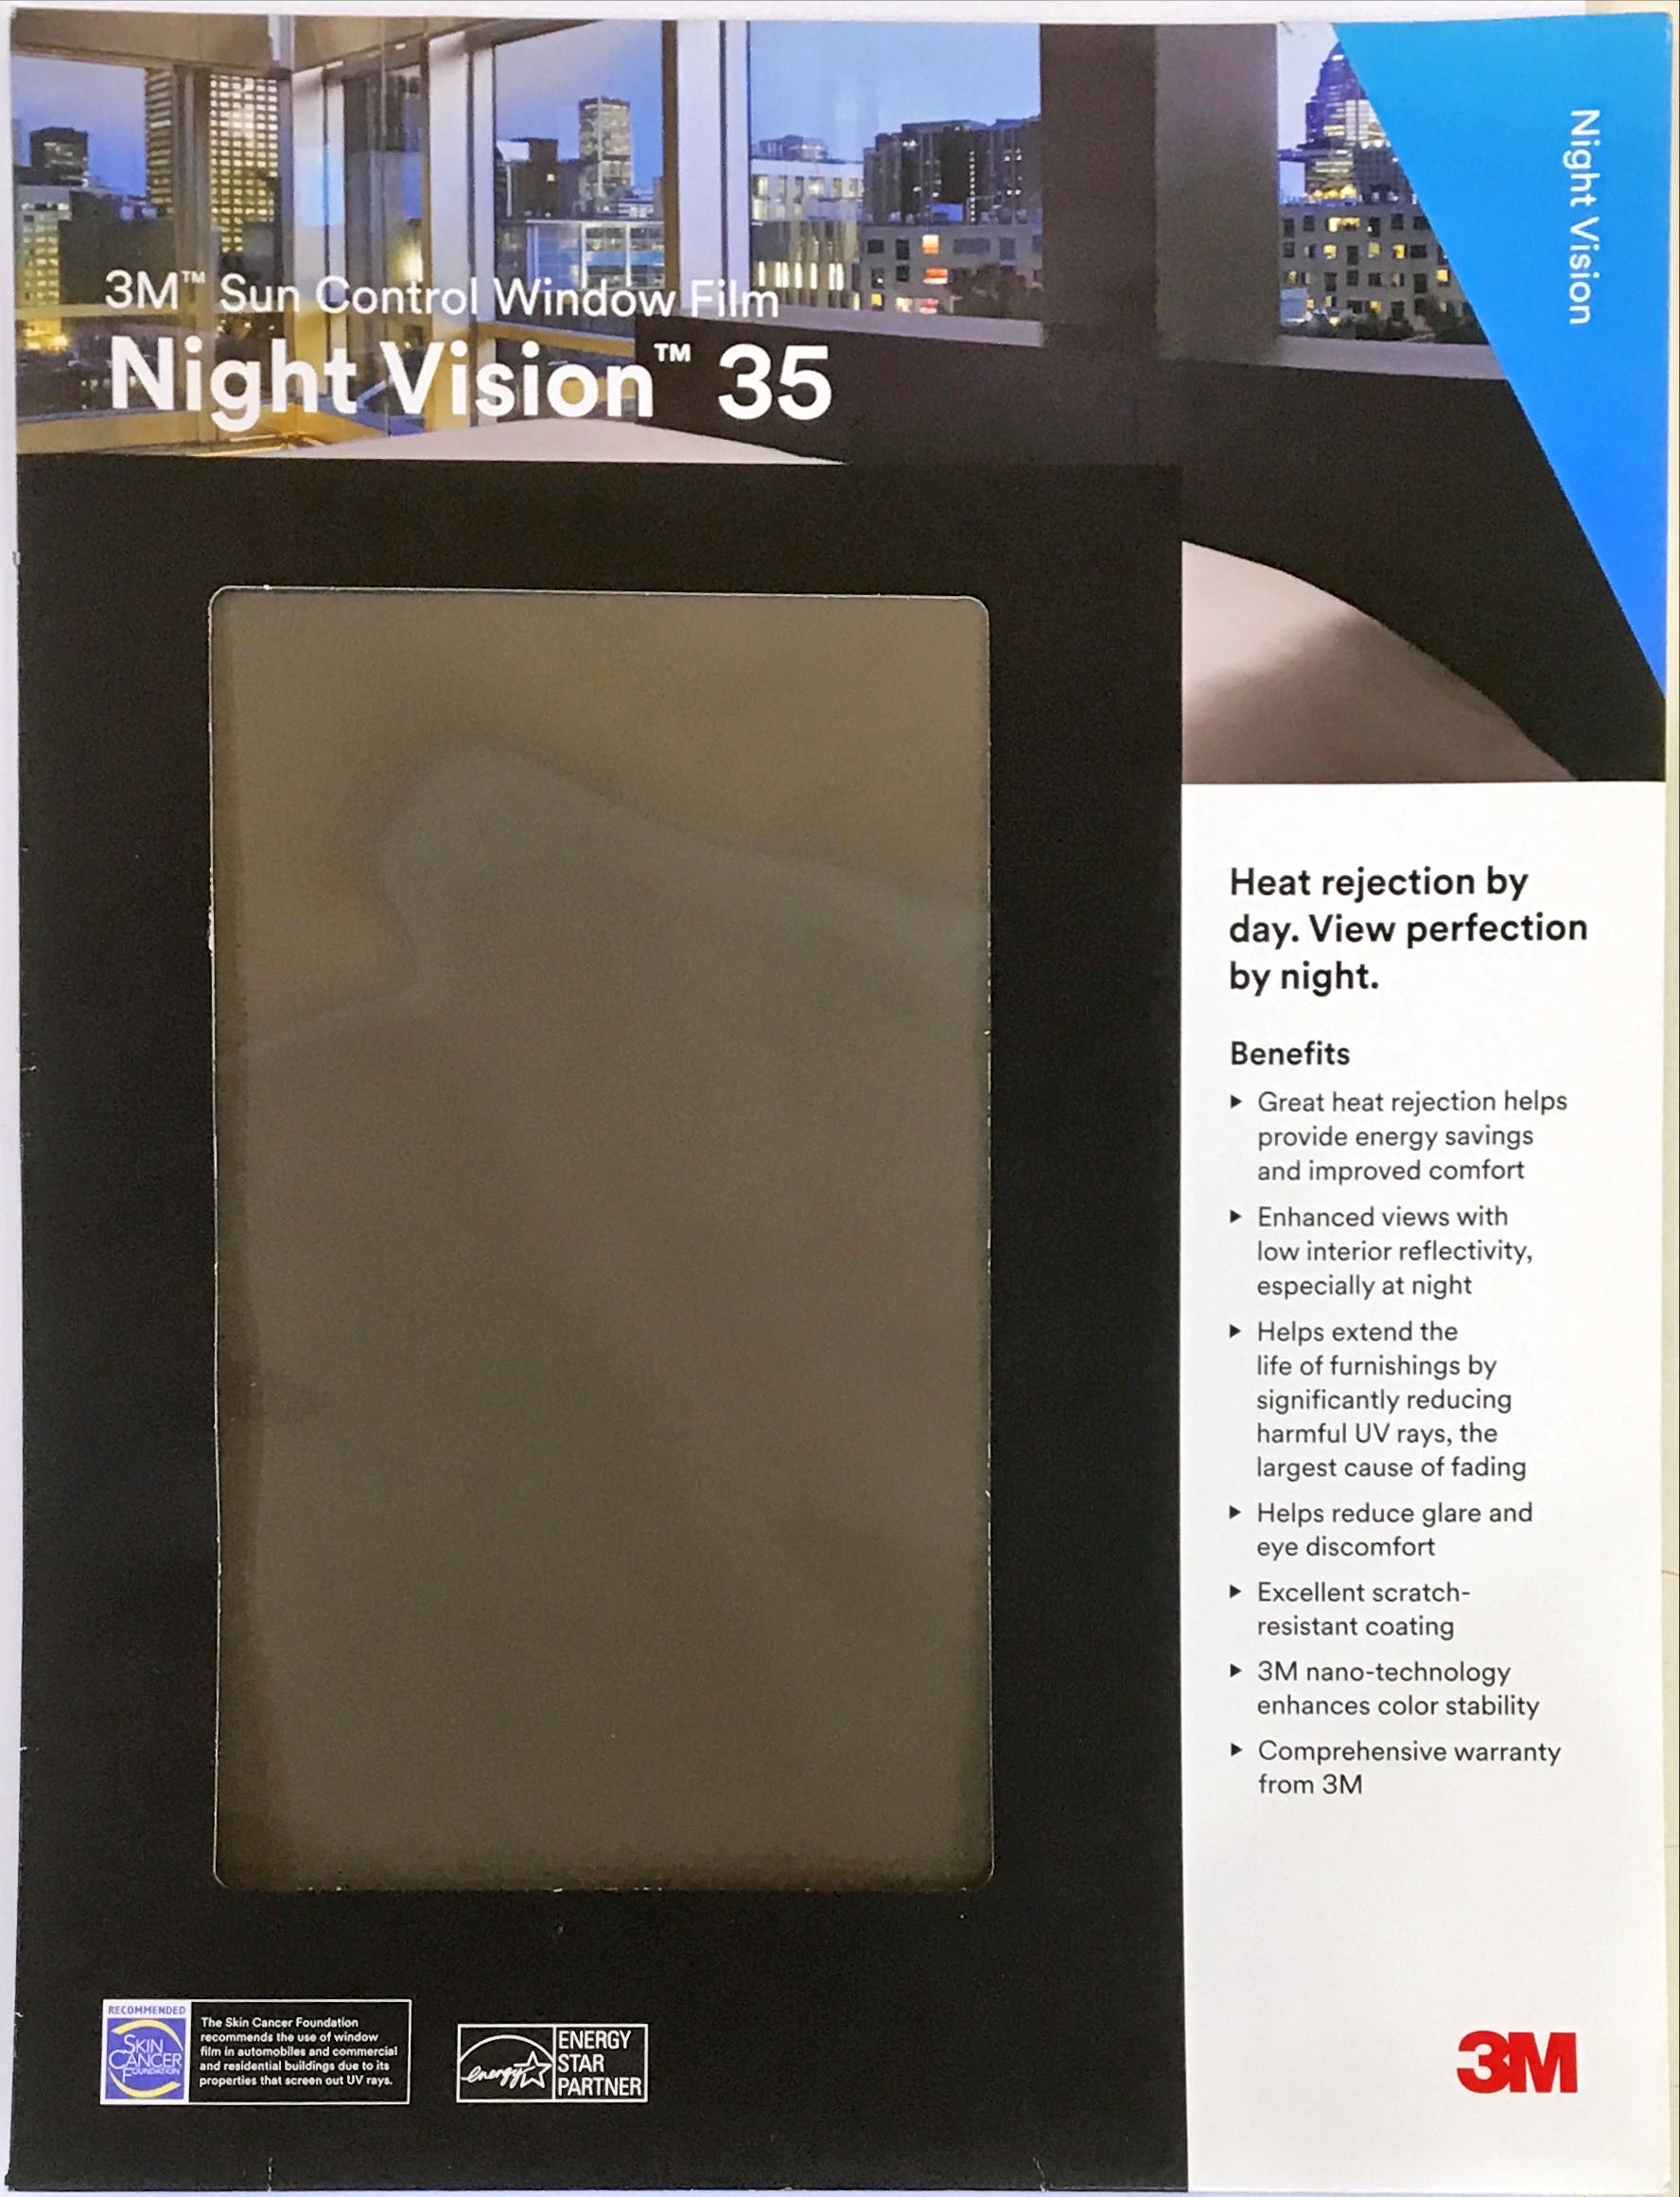 NIGHT VISION 35